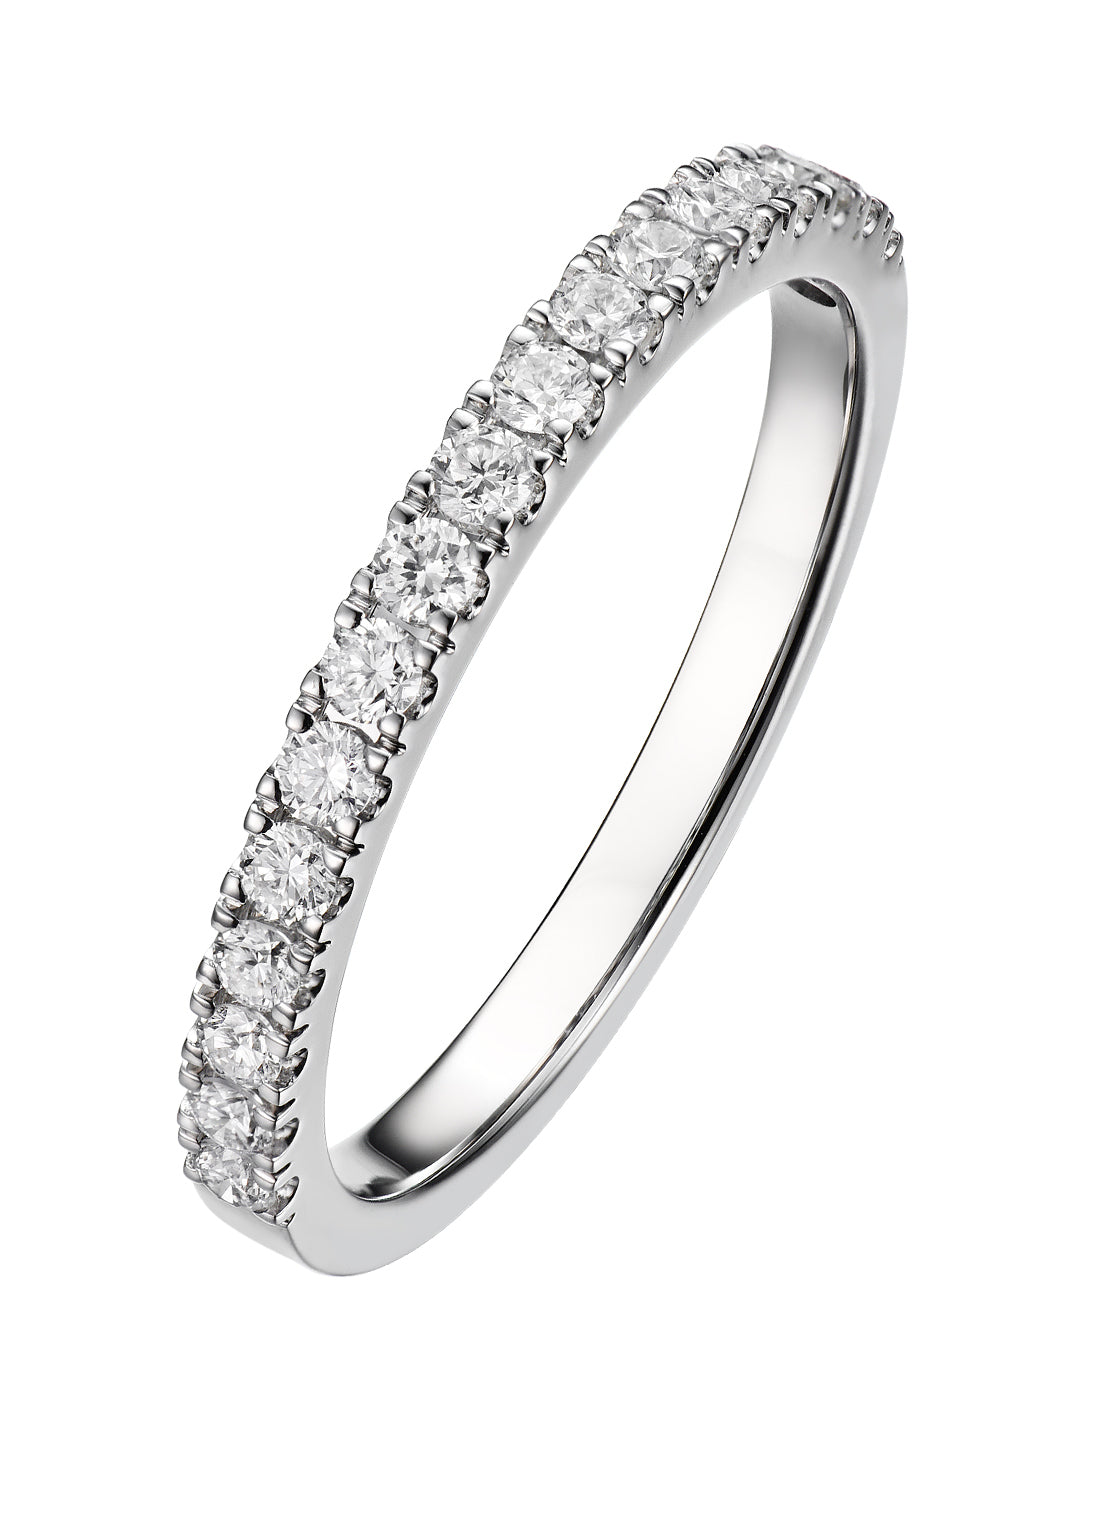 White gold ring, 0.26 ct diamond, wedding